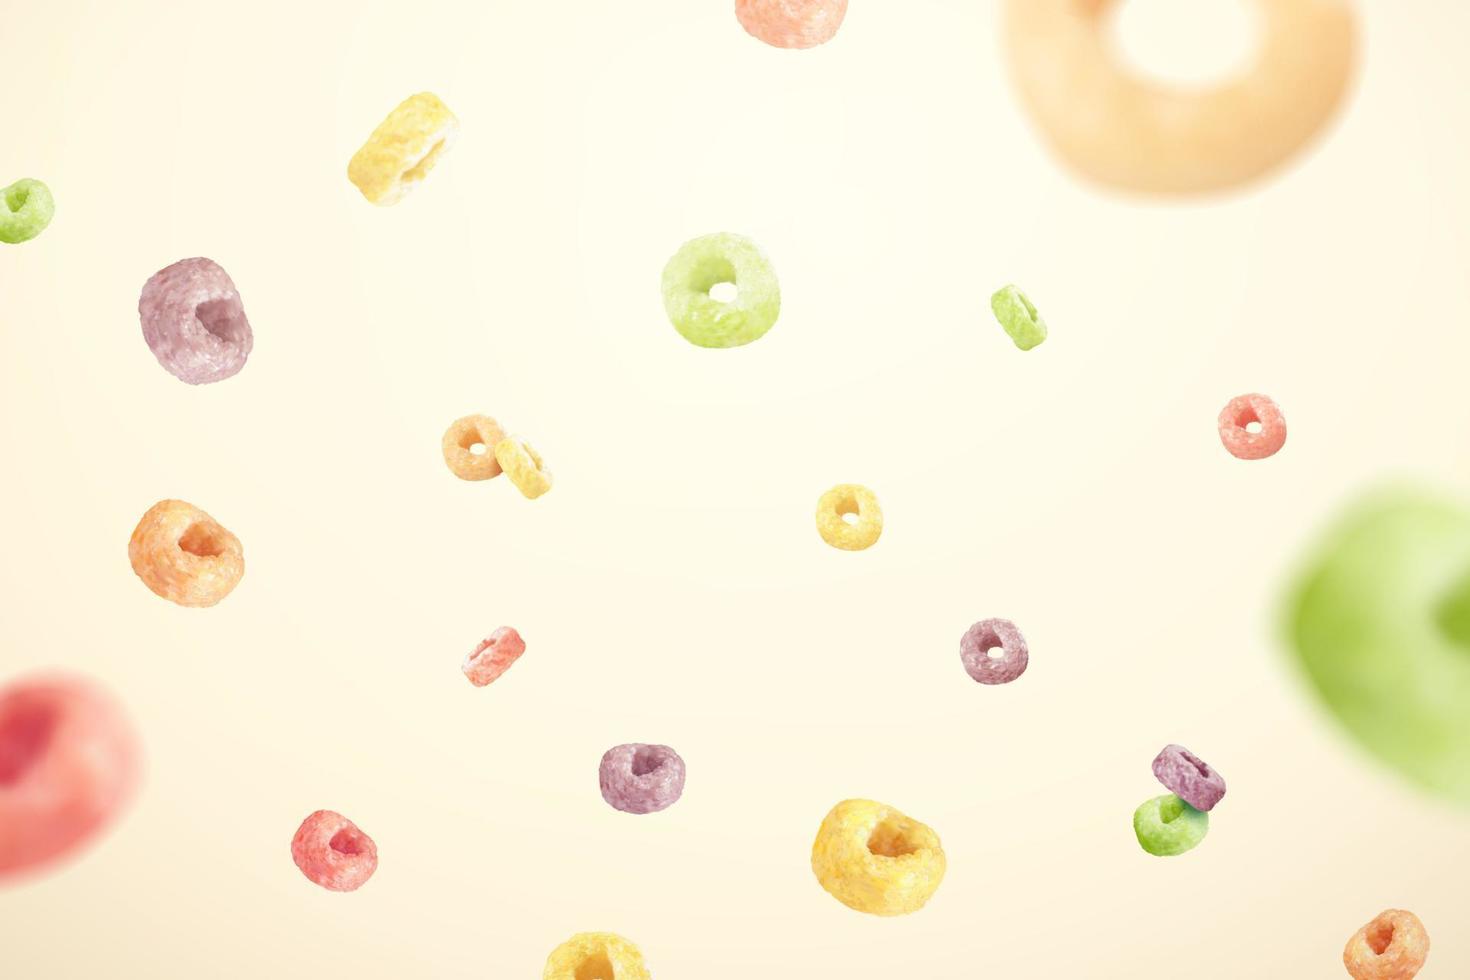 Design element of colorful ring cereals in 3D illustration. Cereal rings of fresh fruit flavors flying on beige color background. vector